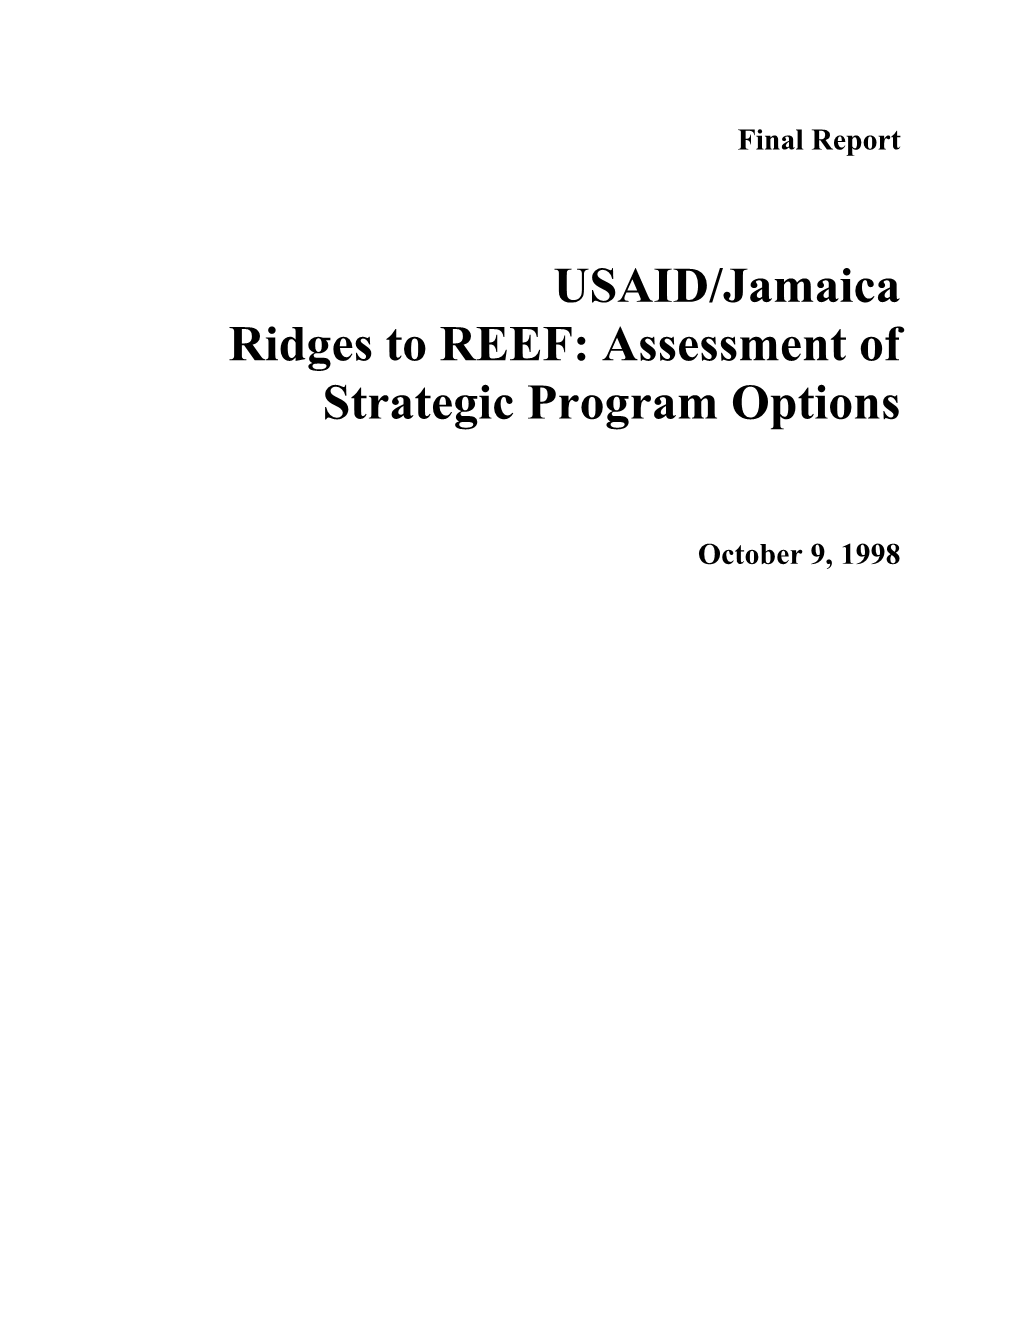 USAID/Jamaica Ridges to REEF: Assessment of Strategic Program Options